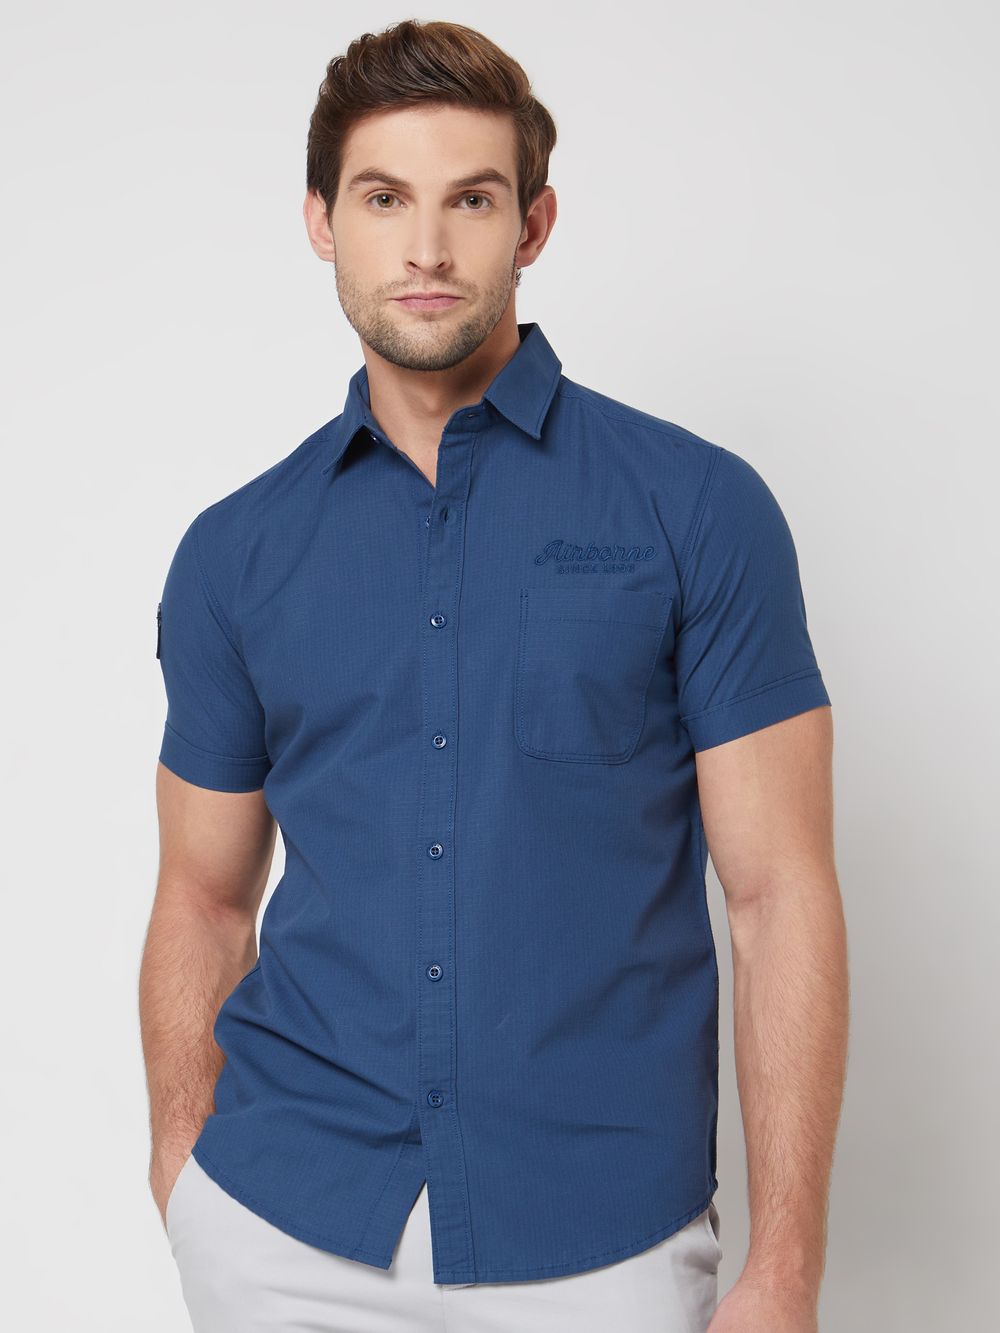 Blue Badged Plain Slim Fit Casual Shirt